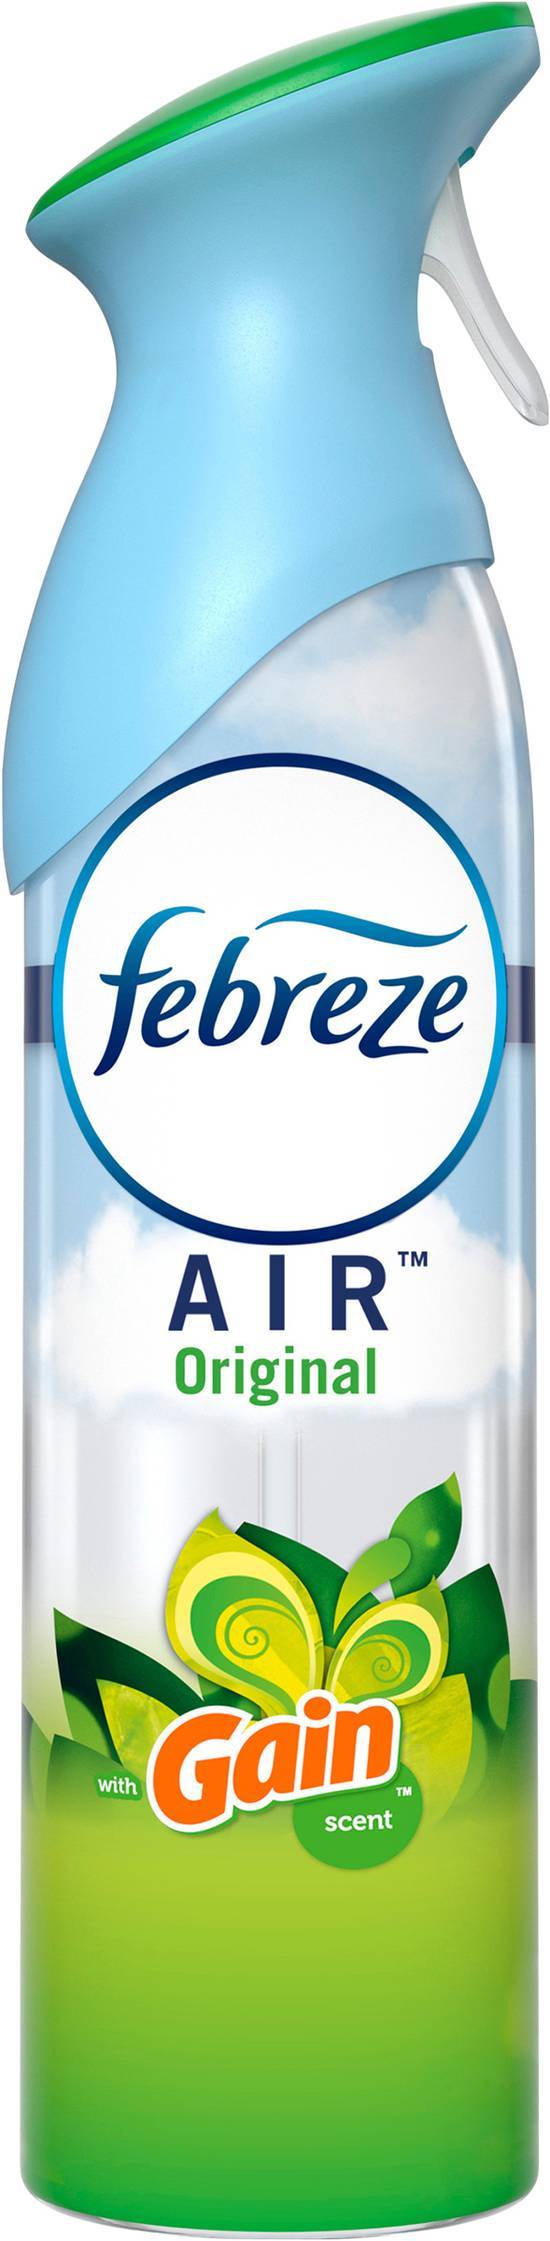 Febreze Gain Scent Air Refresher